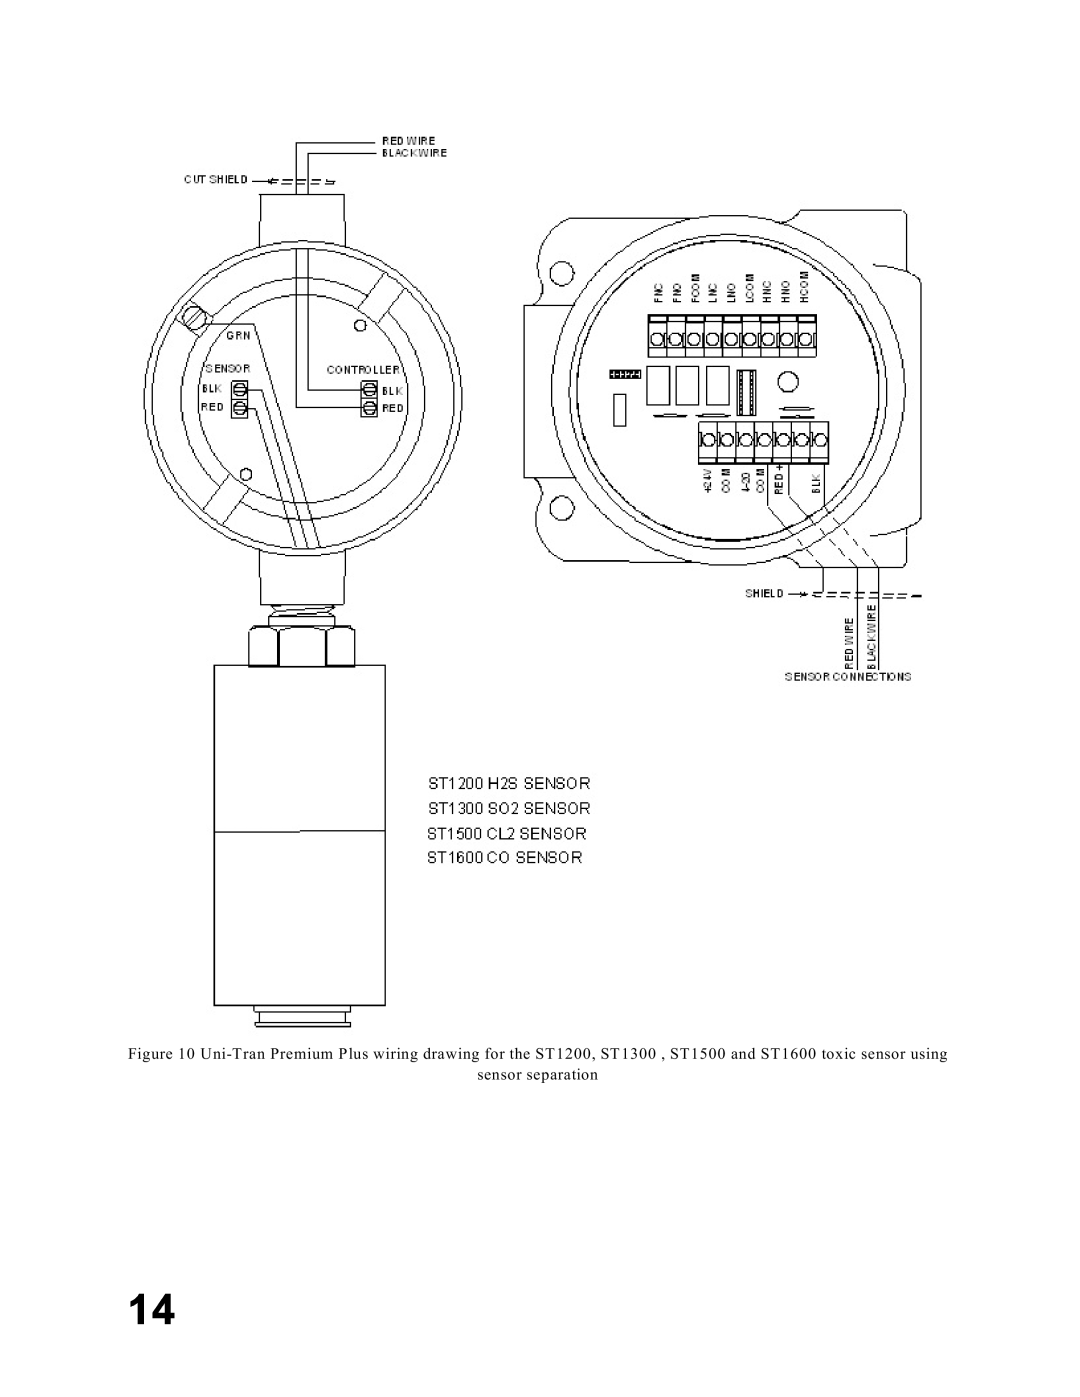 Emerson UT-P+-STXXXX, MA N-00 05-00 user manual sensor separation 